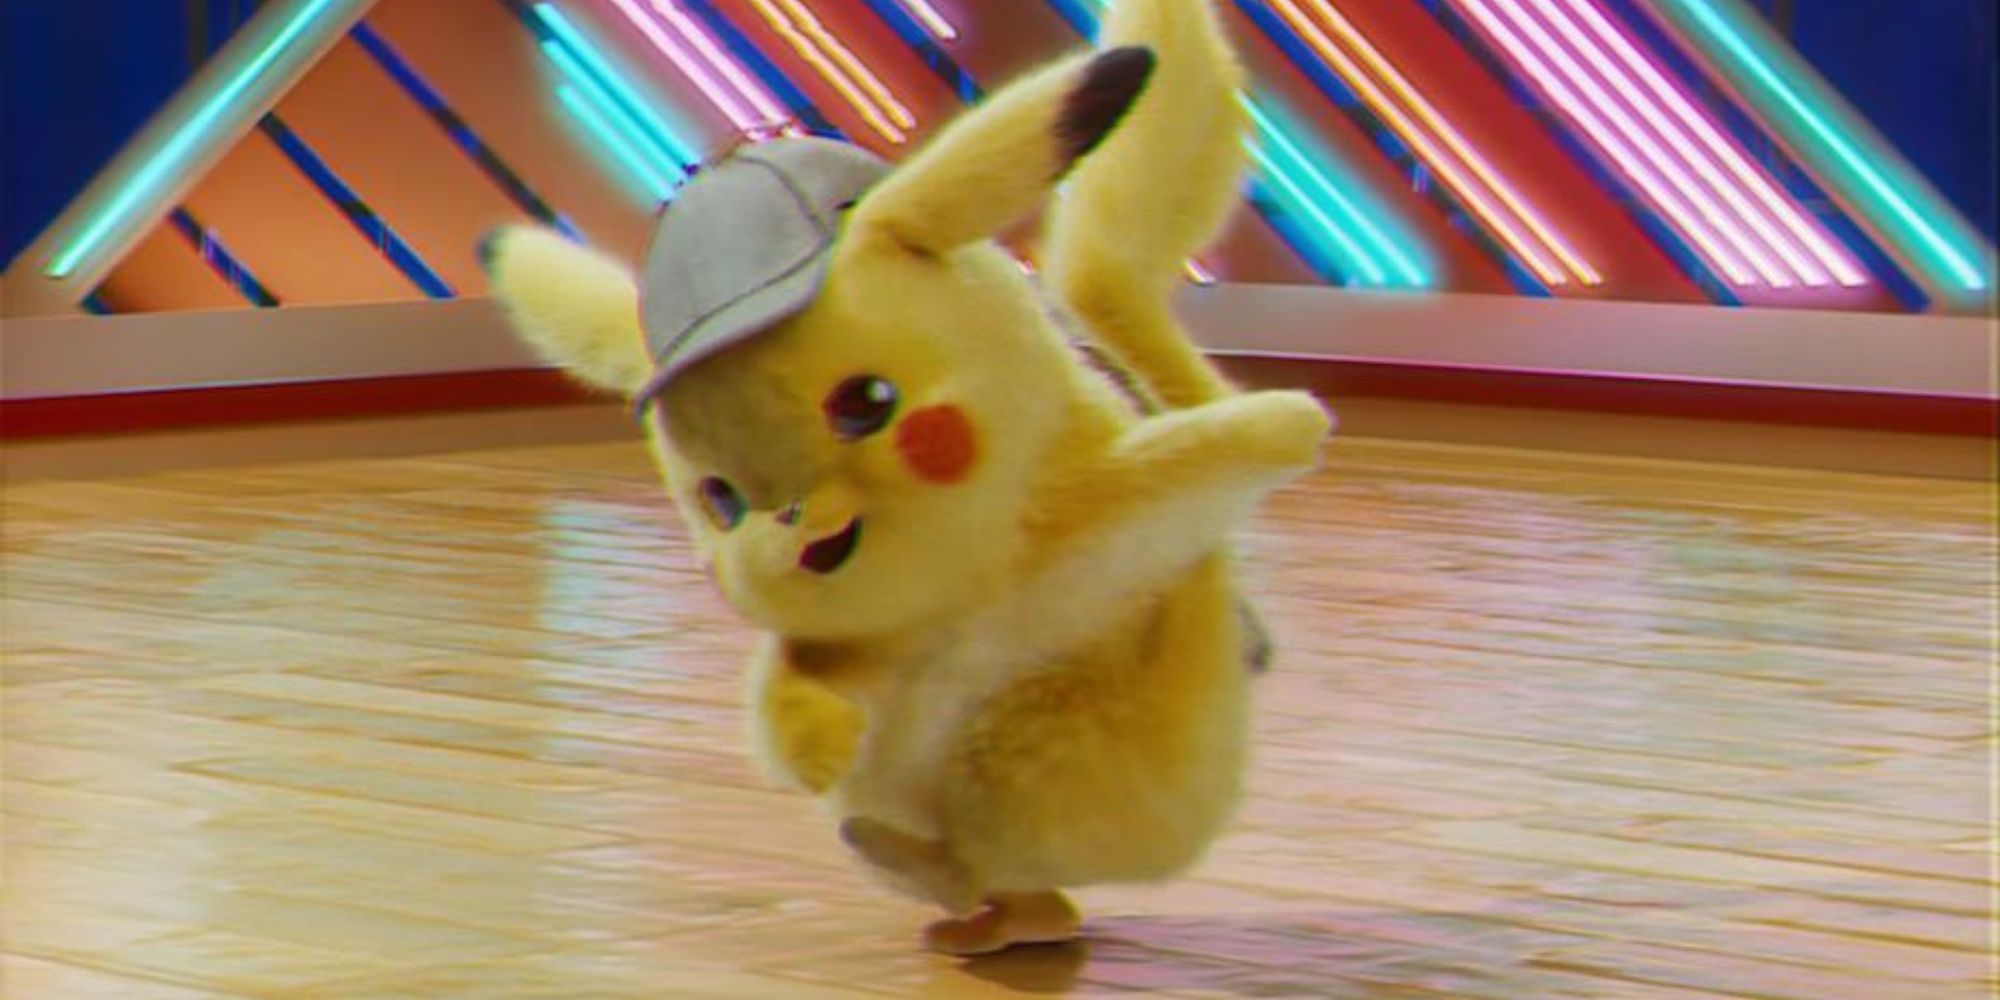 Detective Pikachu dances in a neon-lit room